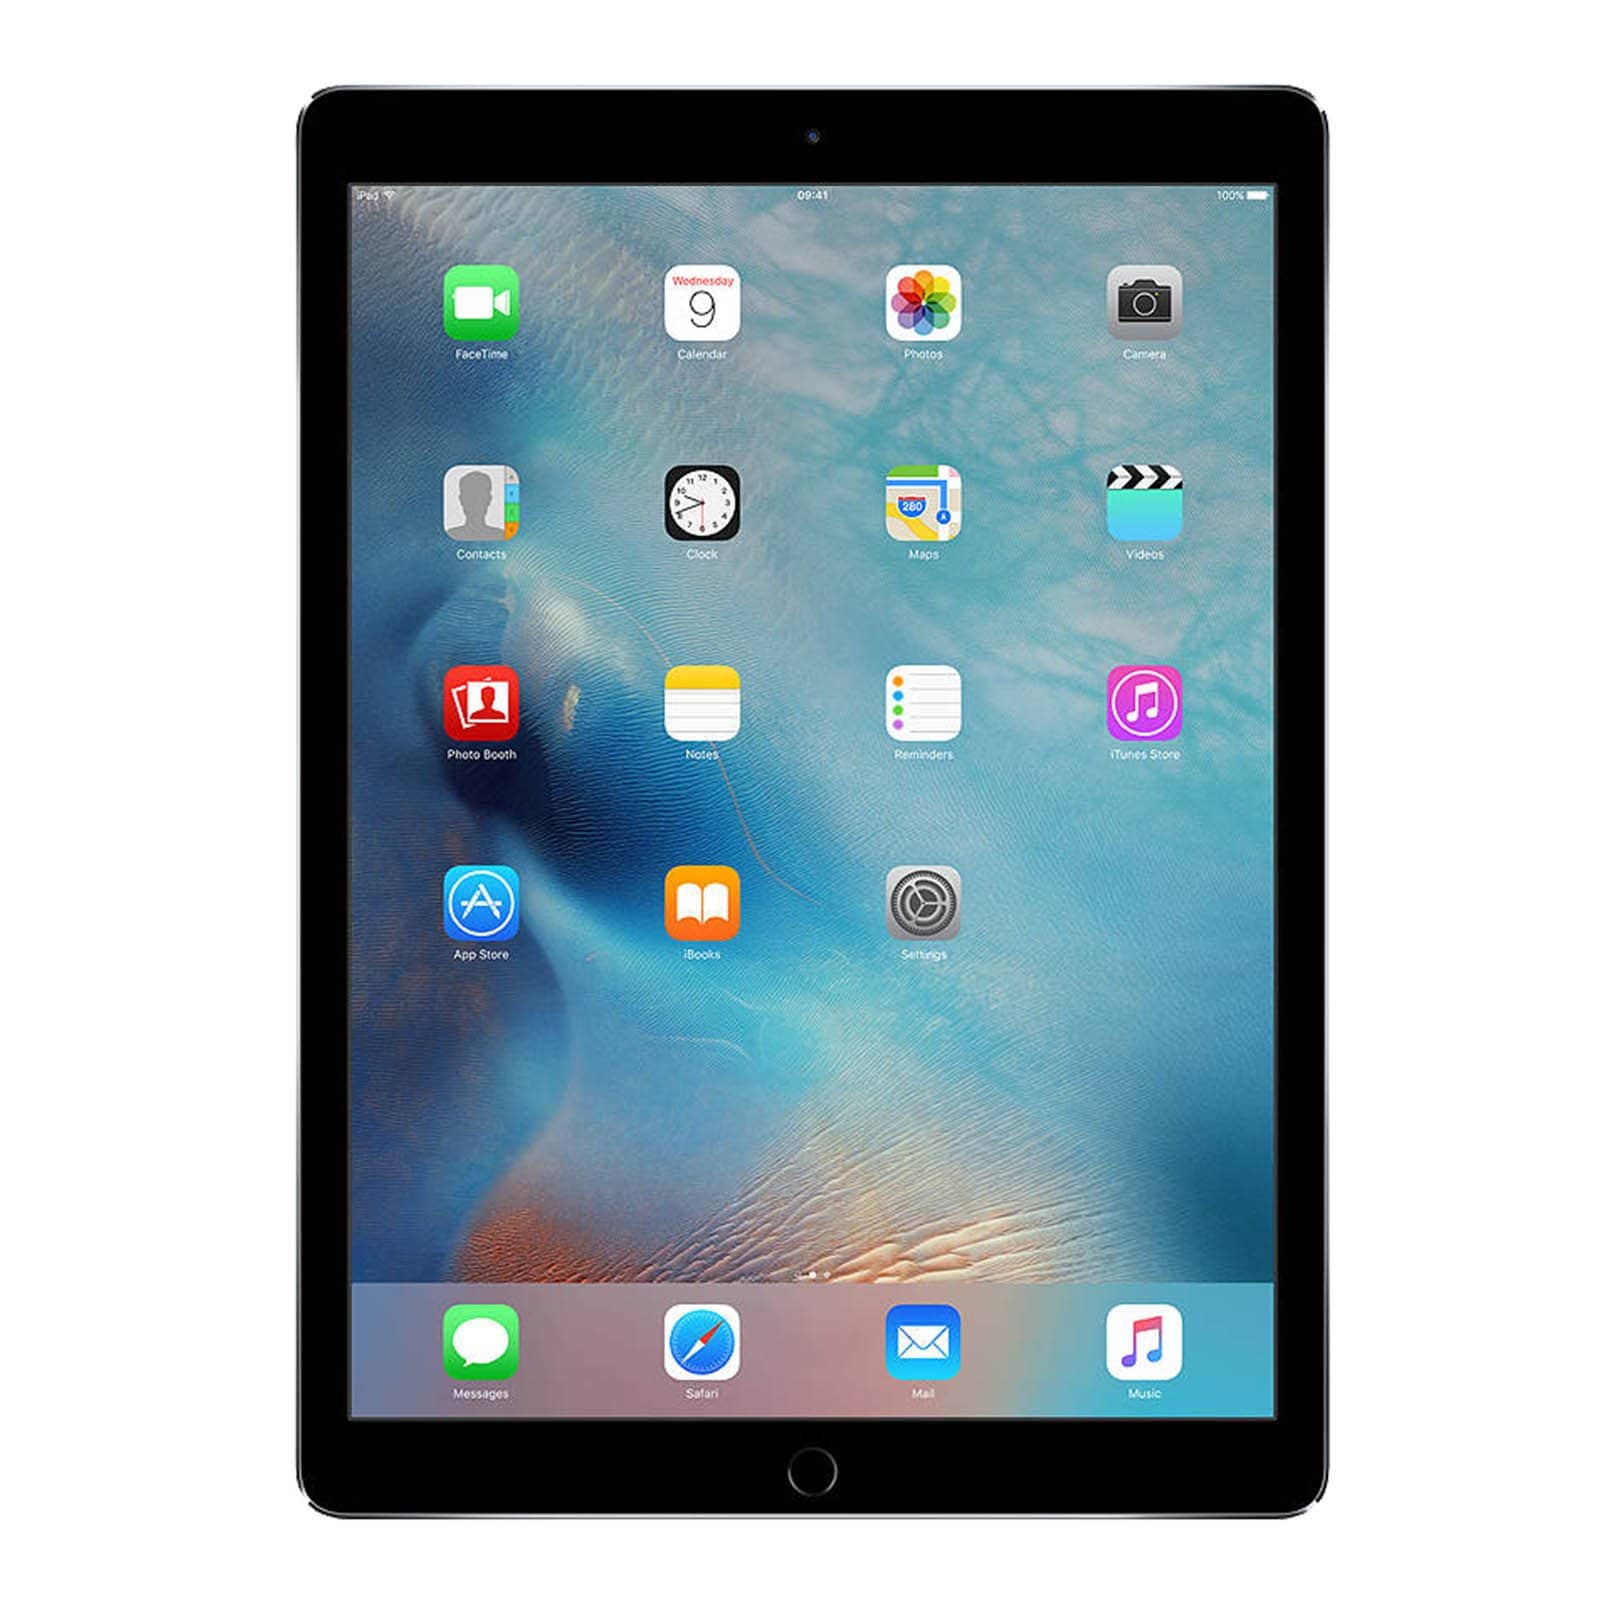 iPad Pro 12.9 Inch 1st Gen 128GB Space Grey Very Good - WiFi